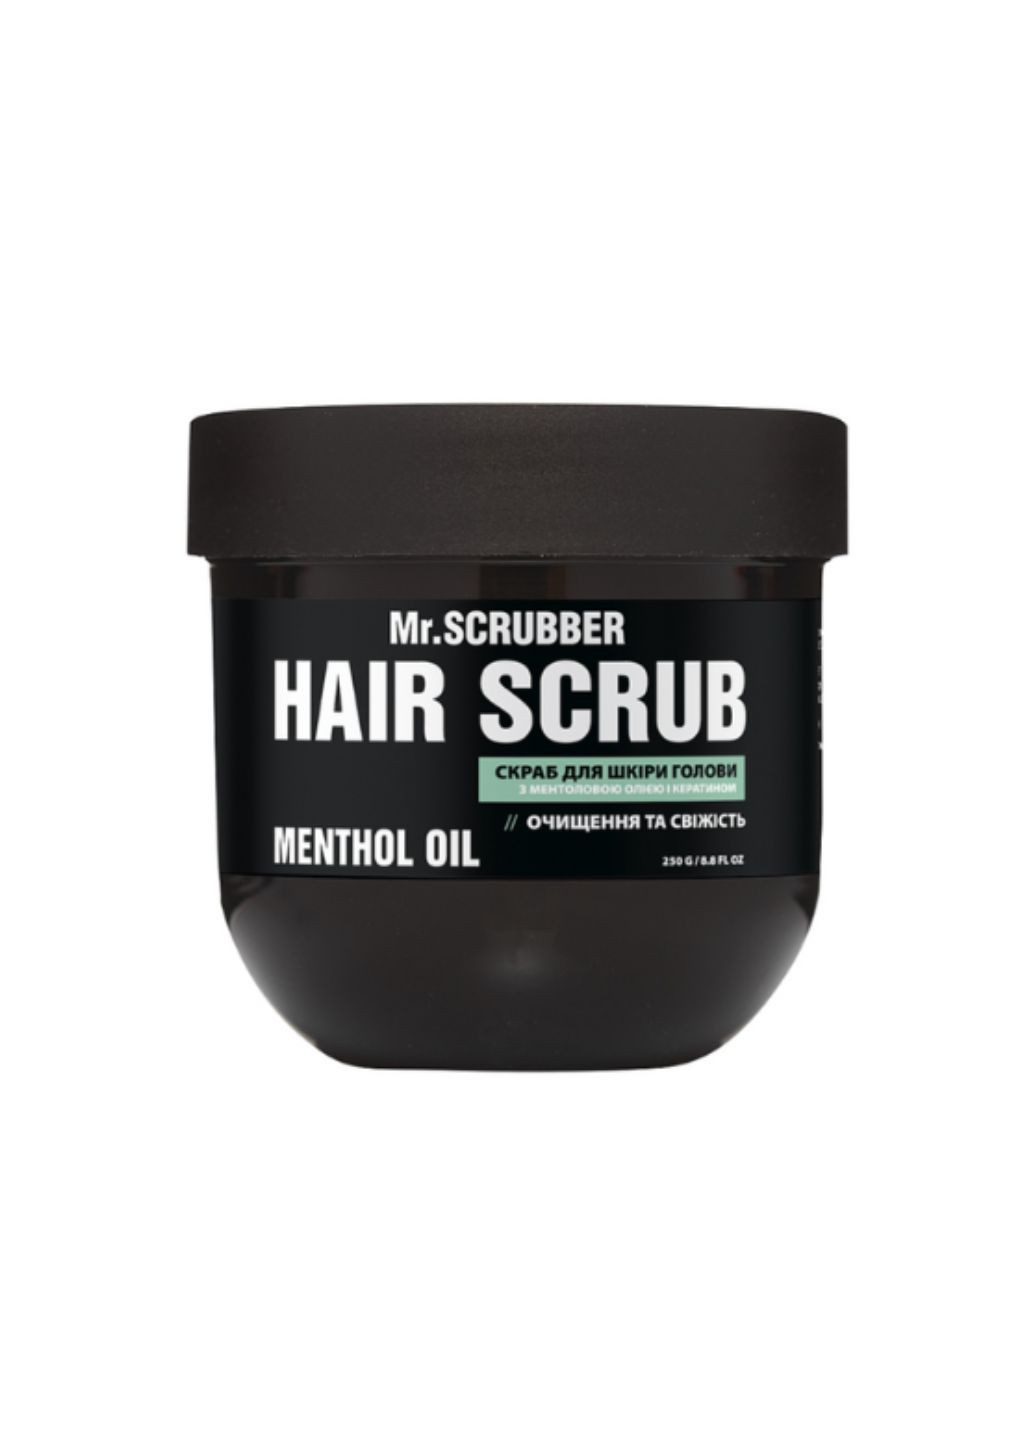 Скраб для кожи головы с ментоловым маслом и кератином Mr.Scrubber Menthol Oil Hair Scrub Mr. Scrubber